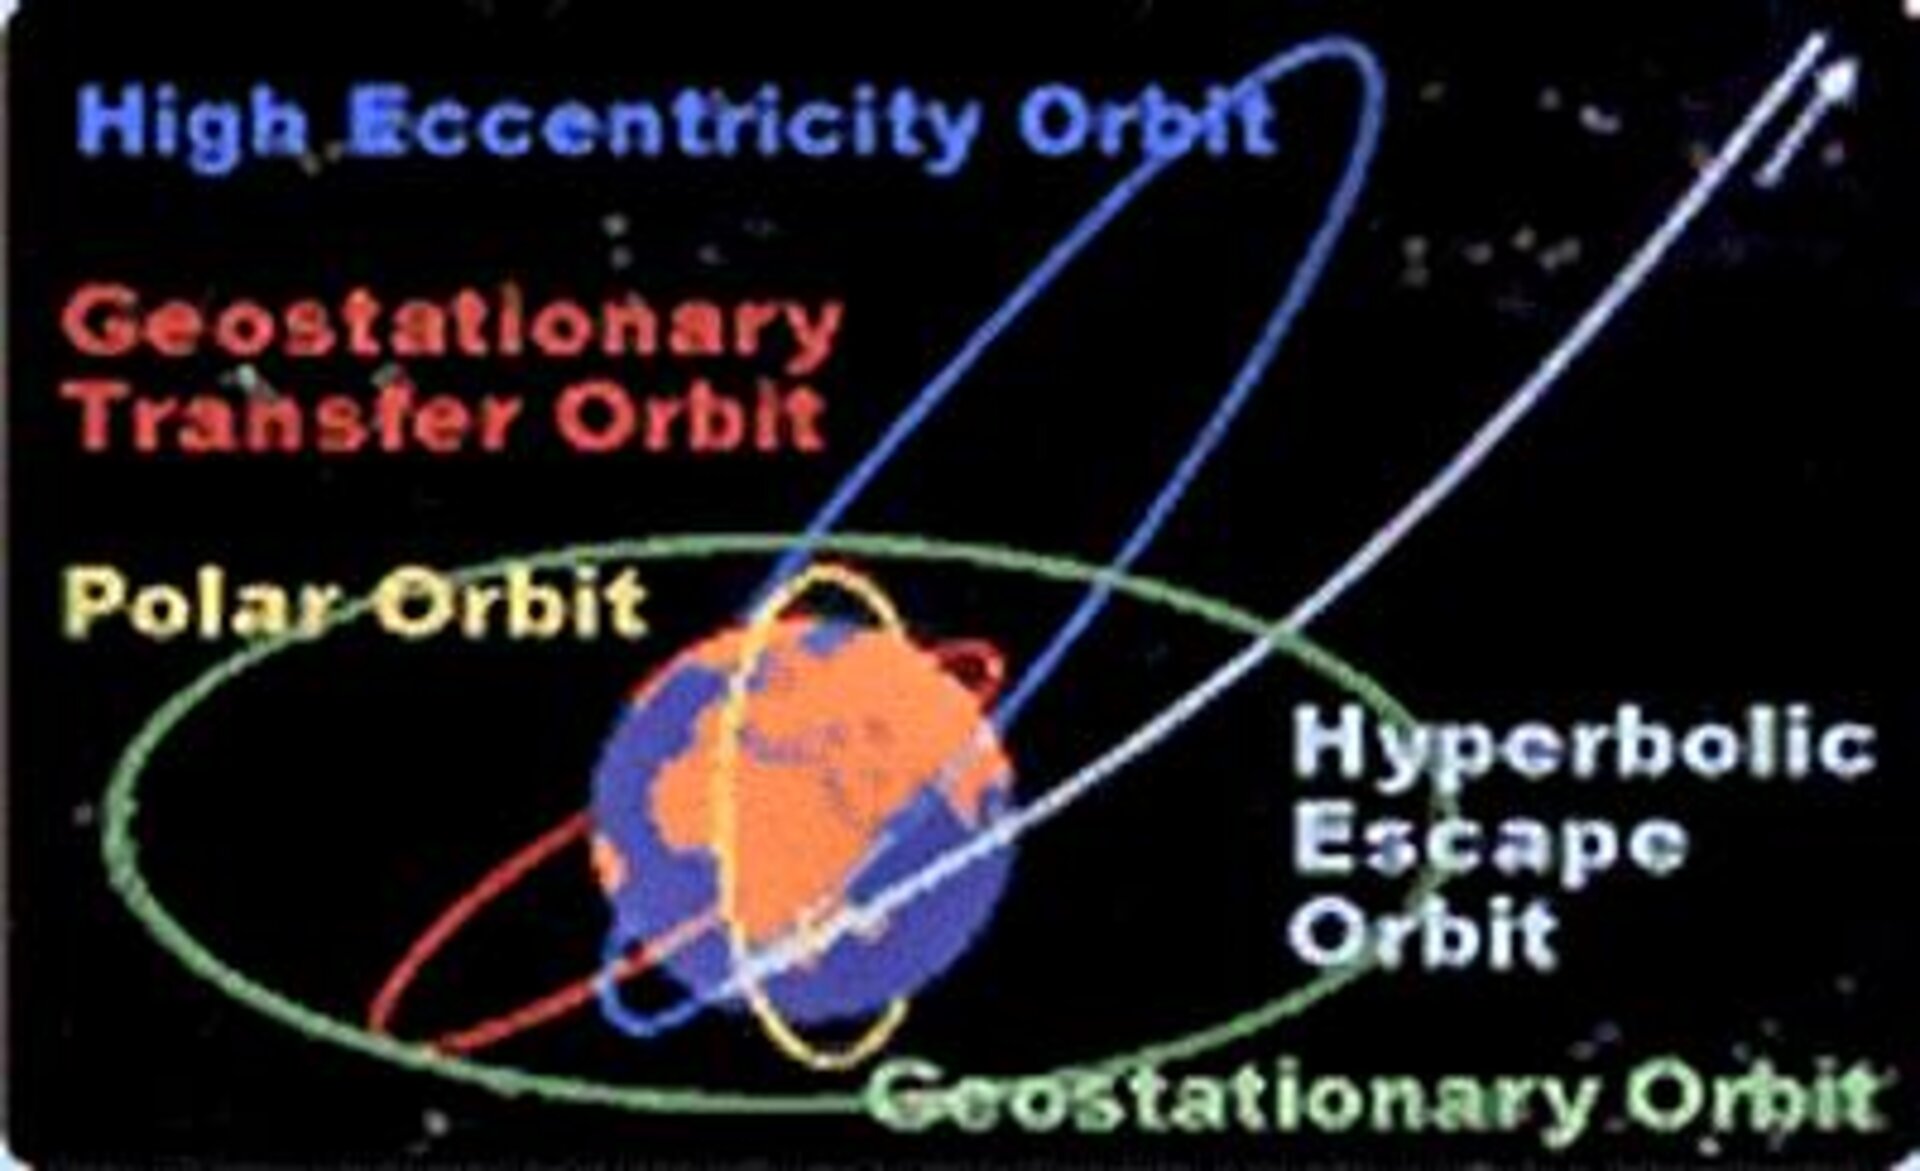 Some popular orbits